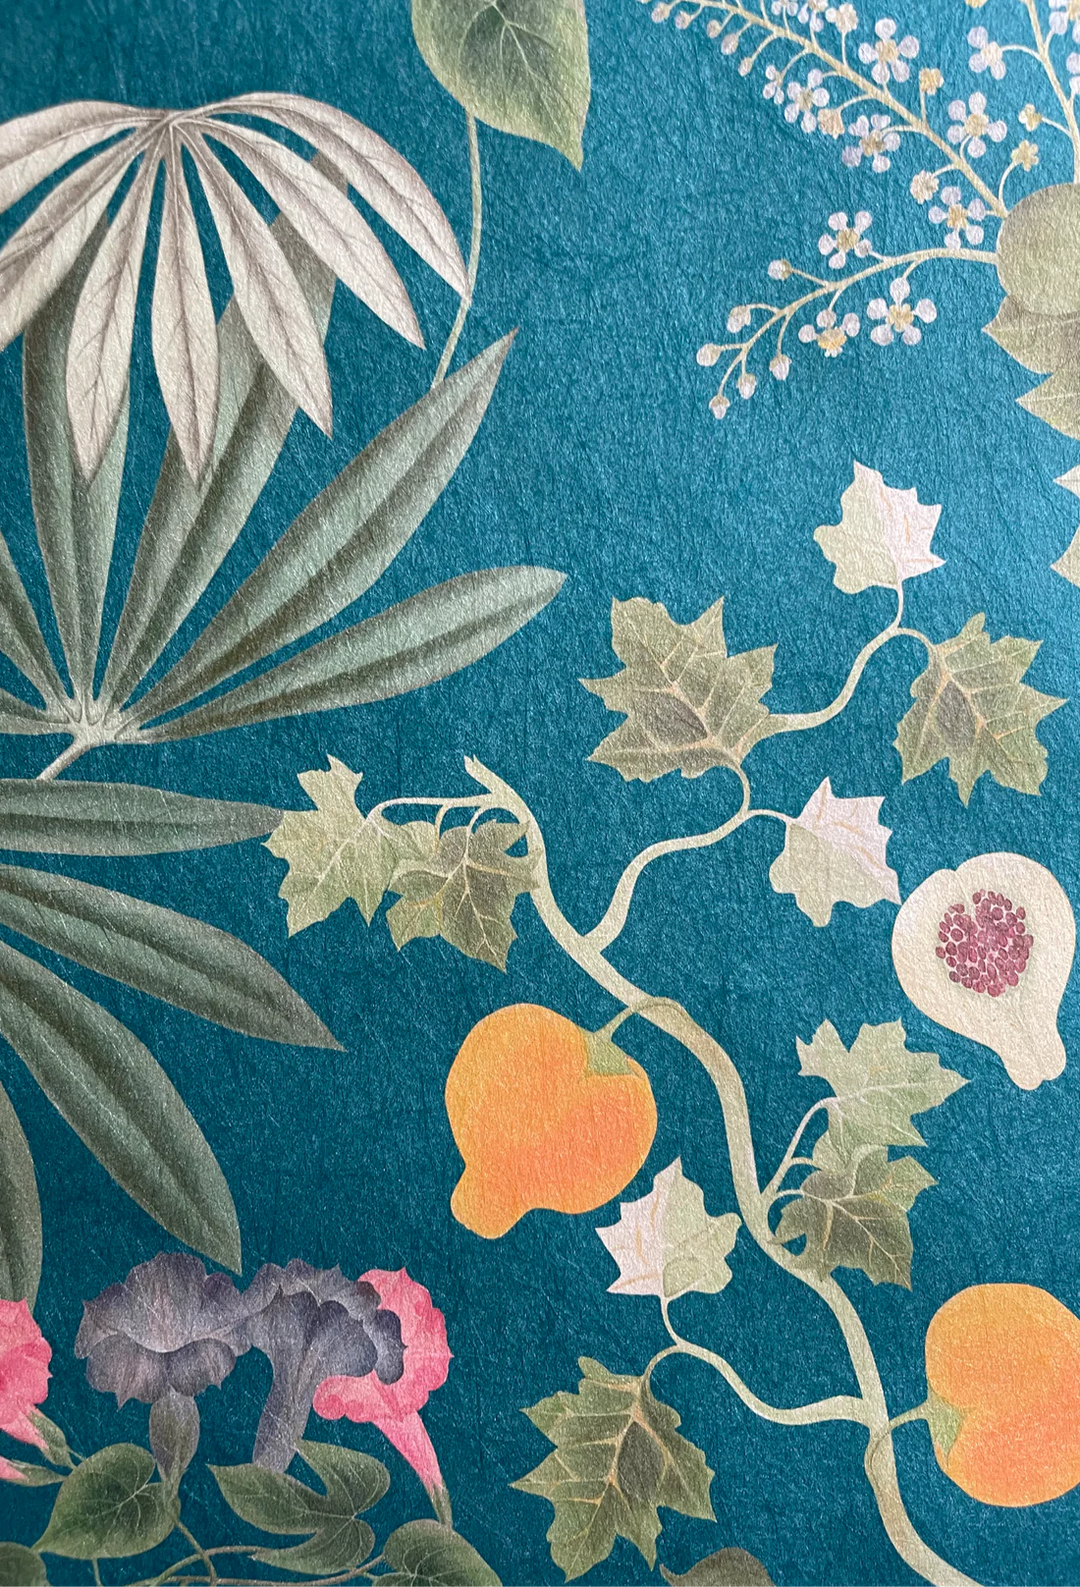 Deus-ex-gardenia-wallpaper-eden-botanical-print-hand-illustrated-exotic-palms-forbidden-fruits-print-Cornflower-blue-green-pink-blue-print-blue-background